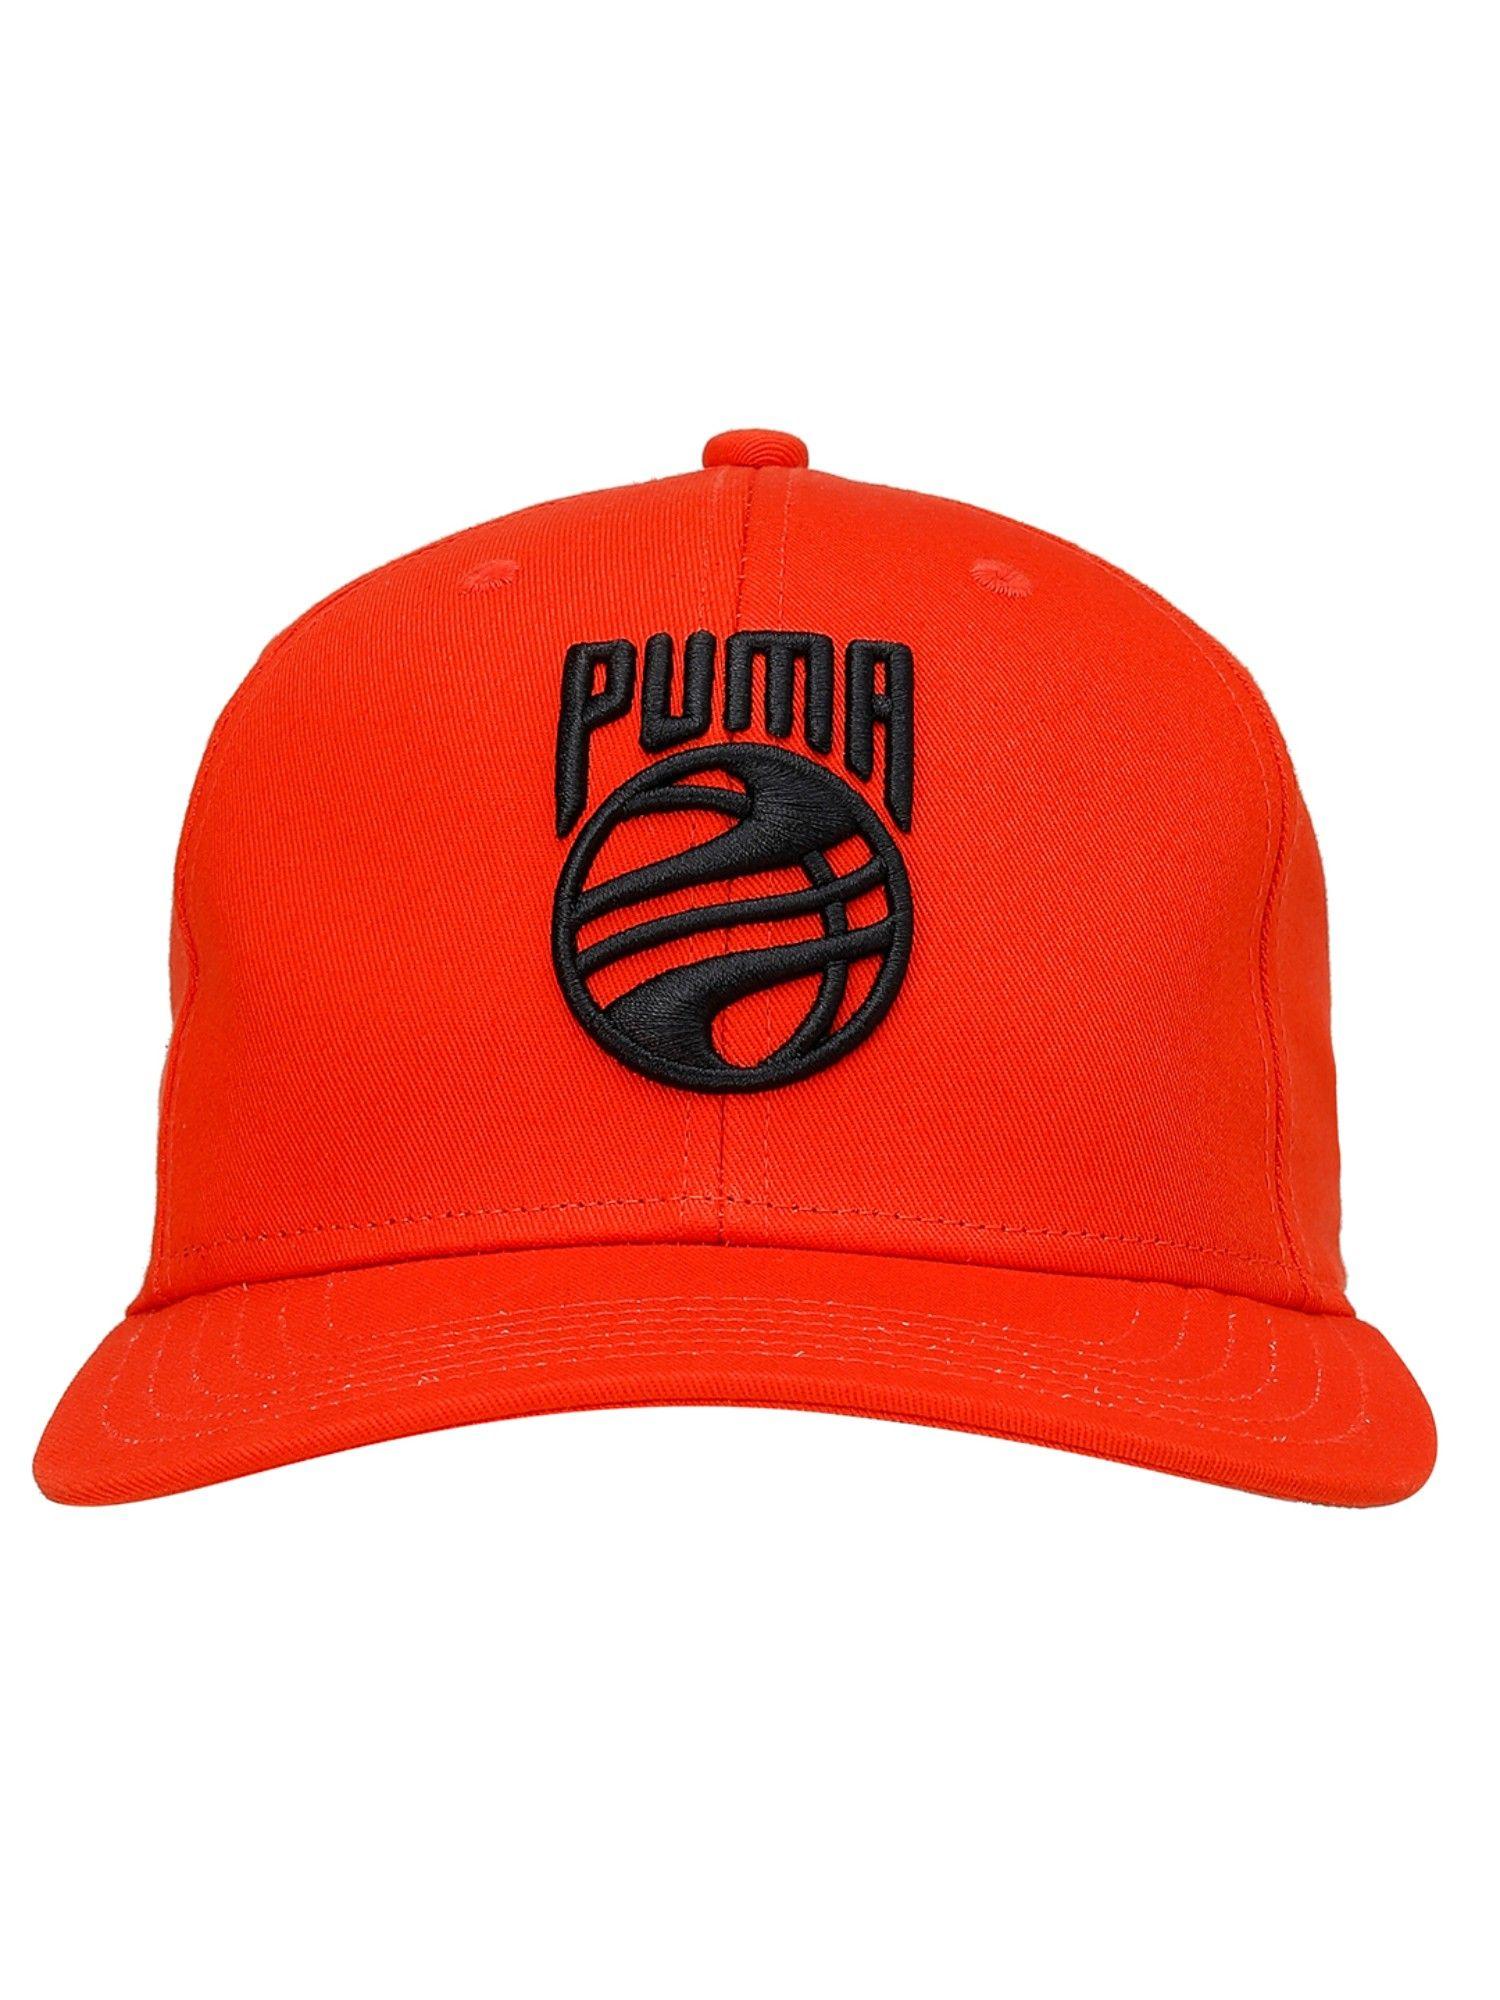 basketball-pro-unisex-red-cap